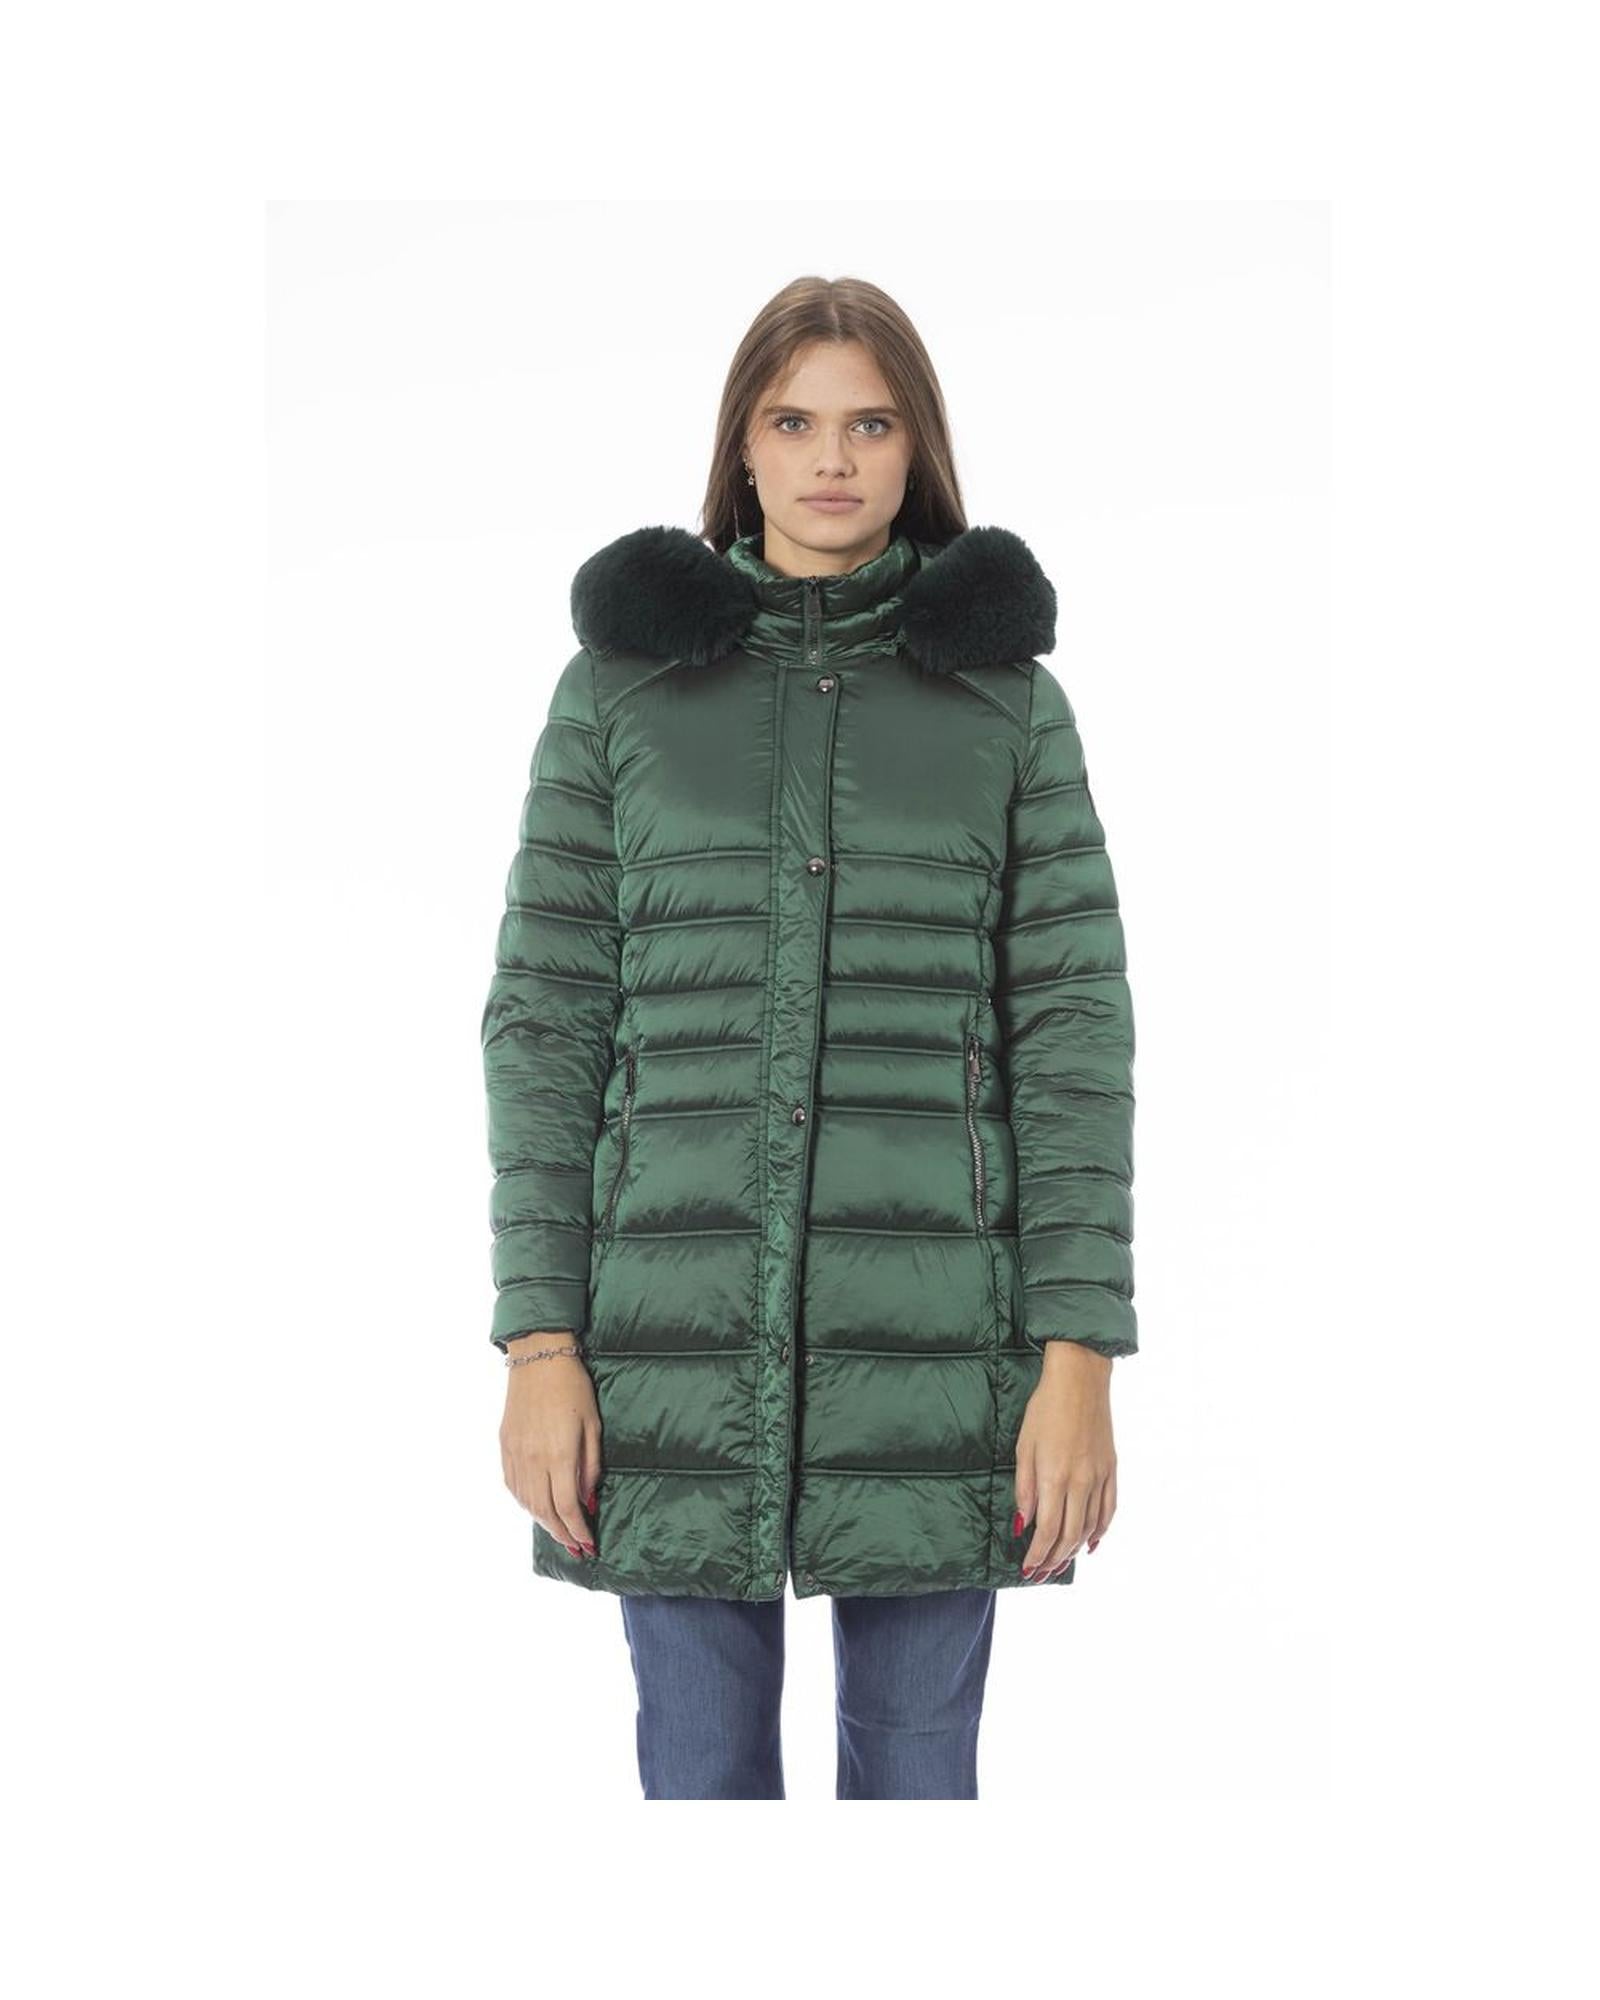 Baldinini Trend Women's Green Polyester Jackets & Coat - M